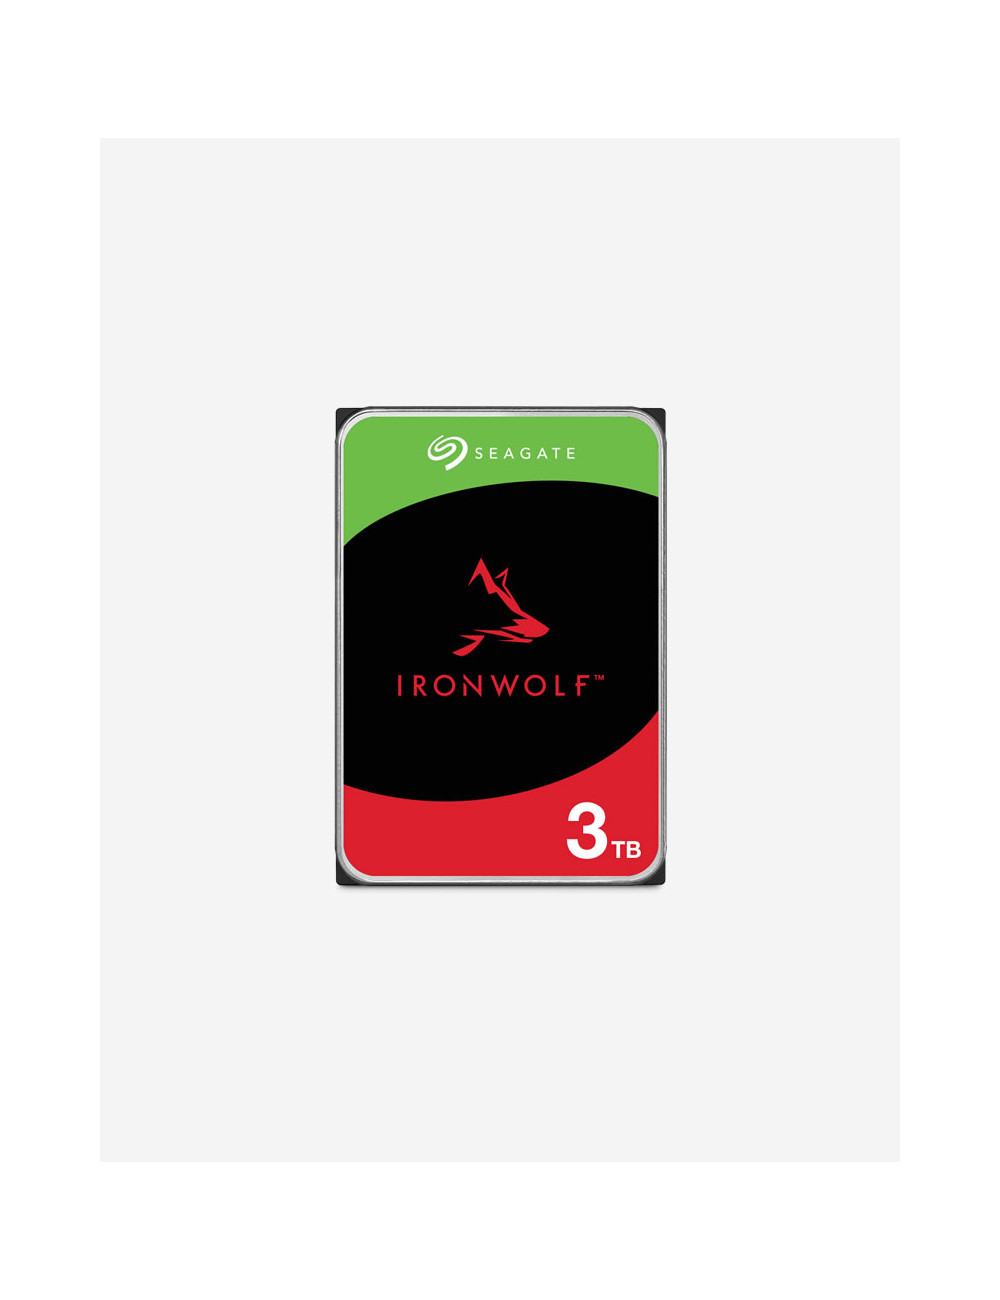 Seagate IRONWOLF 3TB HDD 3.5"